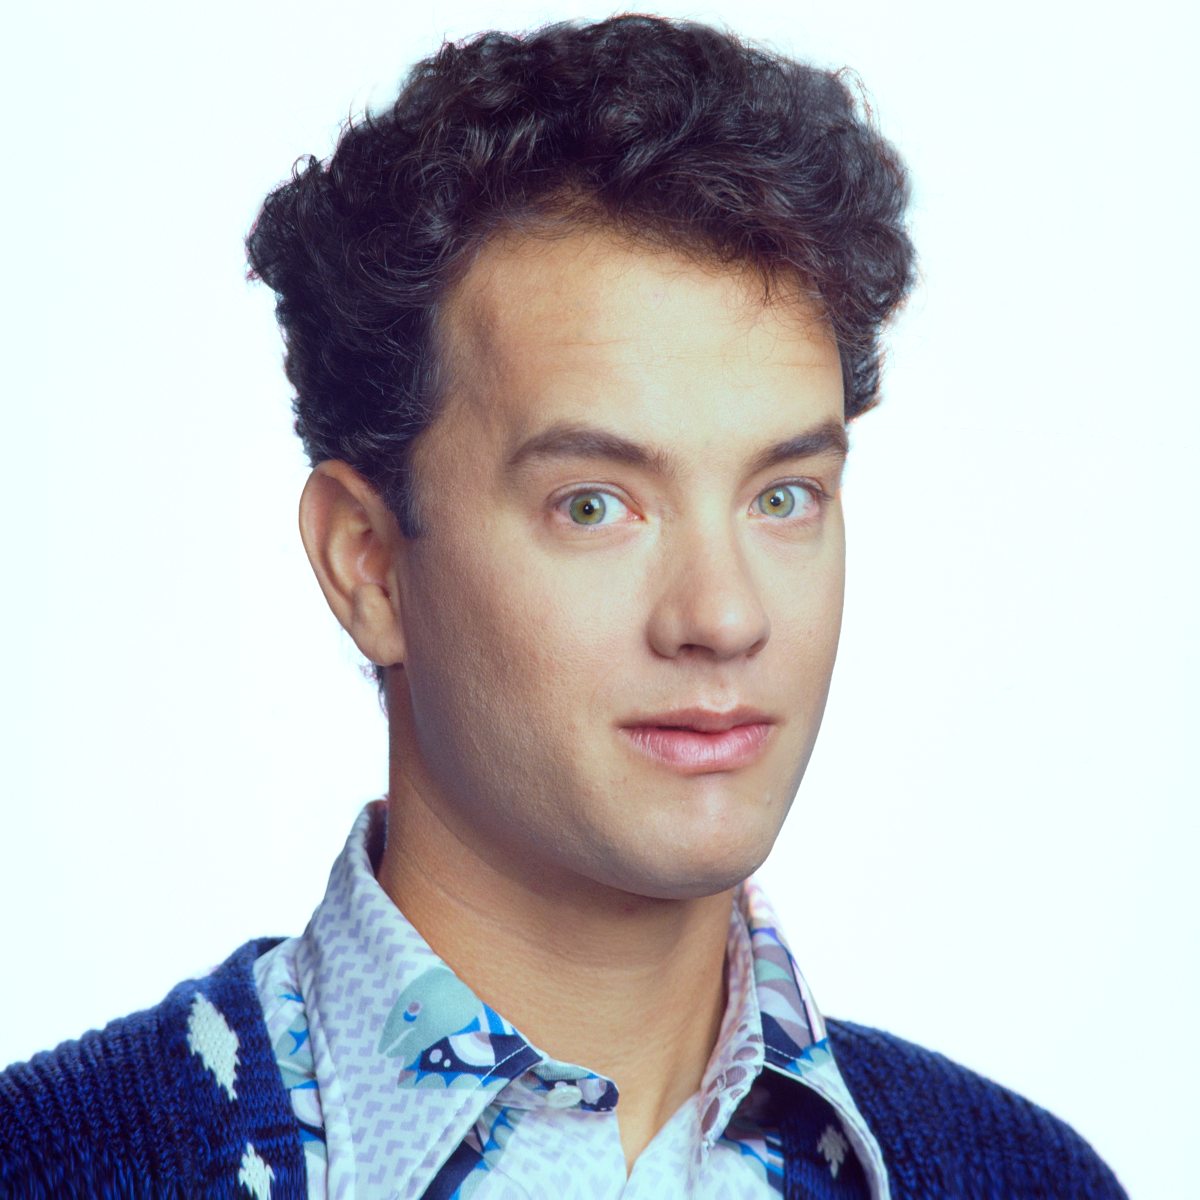 Tom Hanks portrait from Big 1988